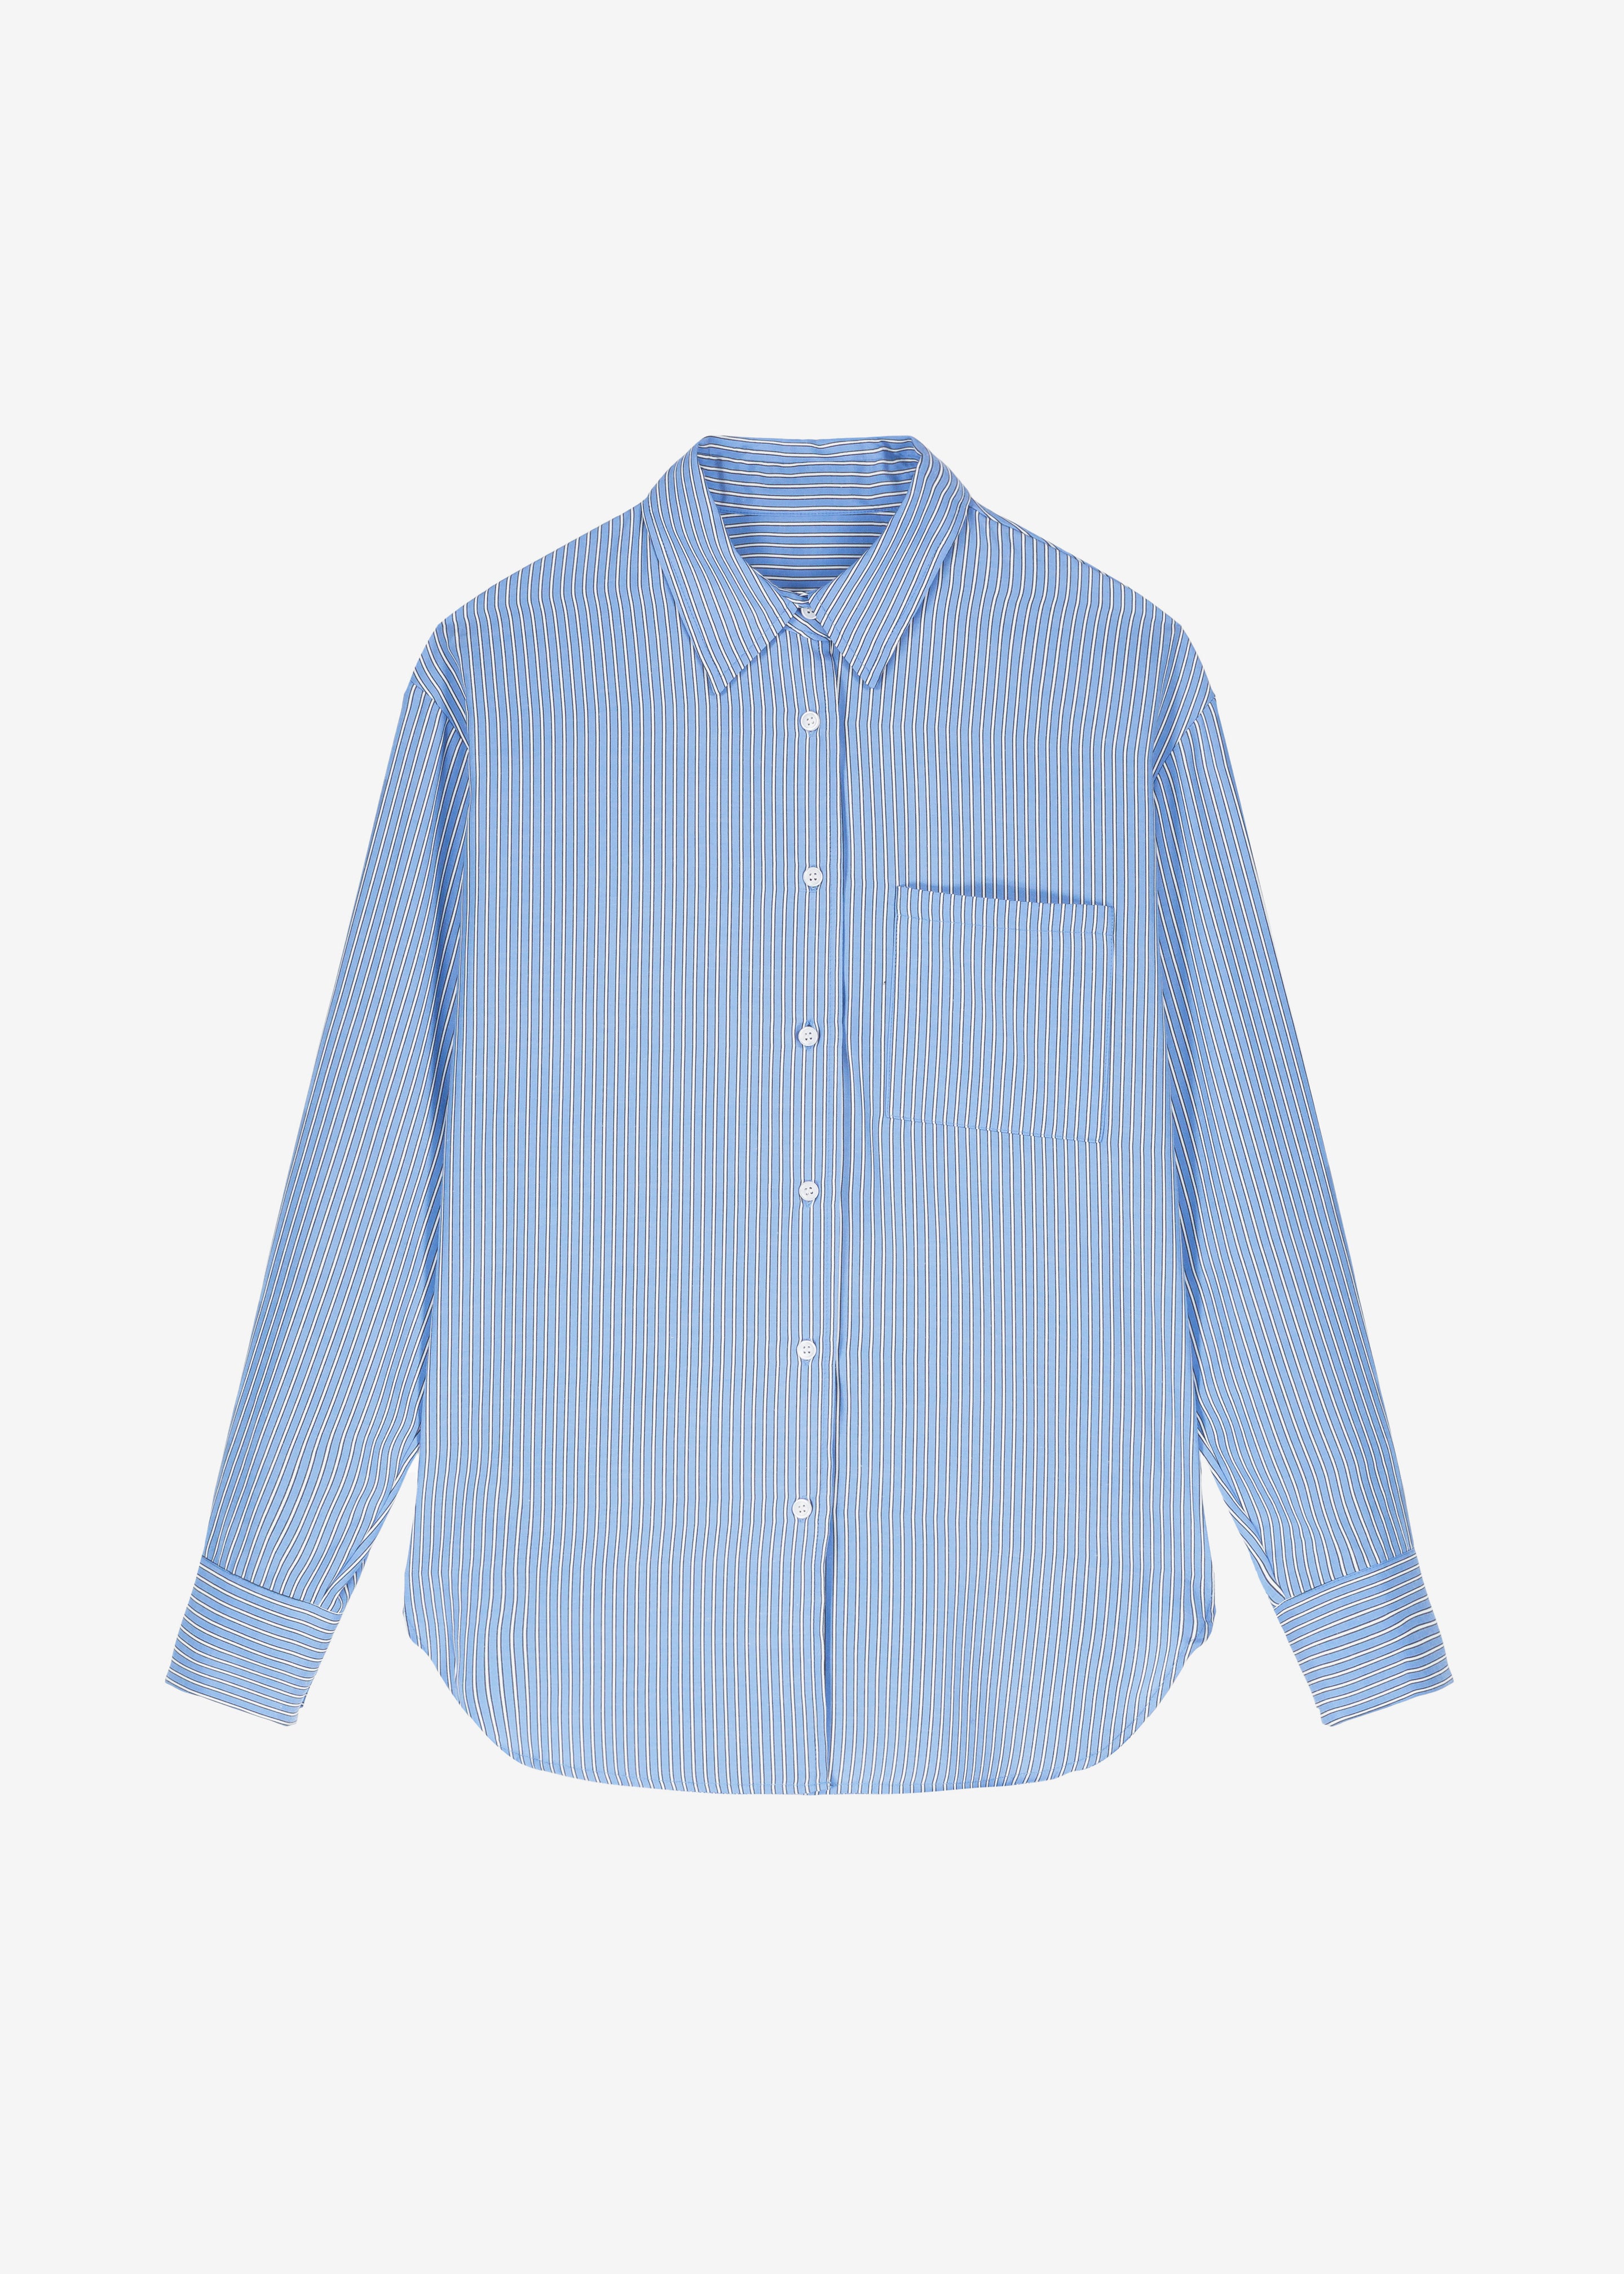 Lui Oxford Shirt - Light Blue/Black Stripe - 7